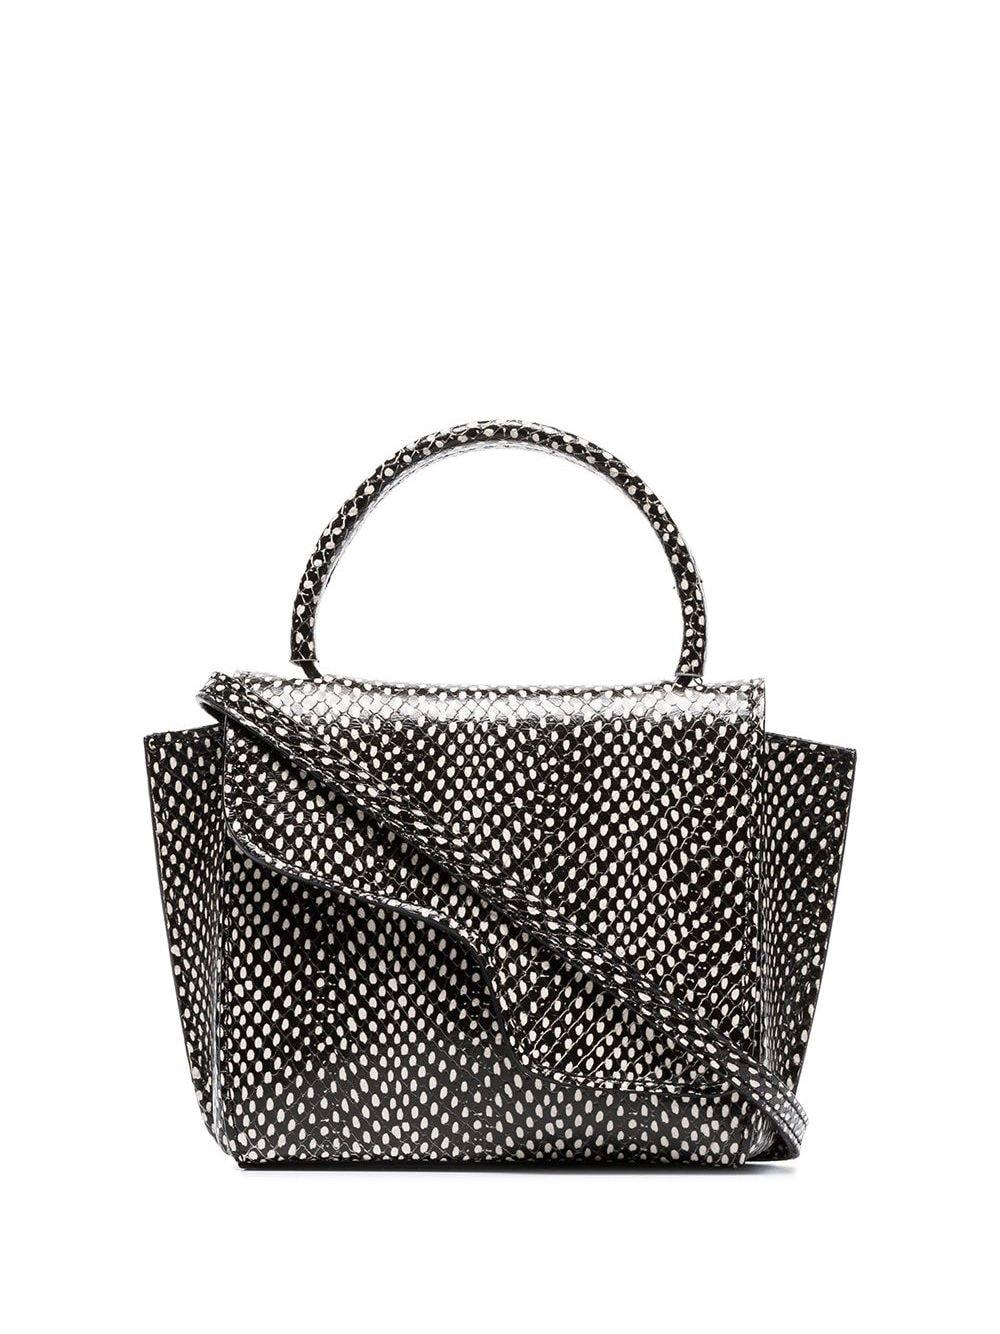 Atp Atelier Black And White Montalcino Dot Snake Print Leather Crossbody Bag - Save 58% - Lyst